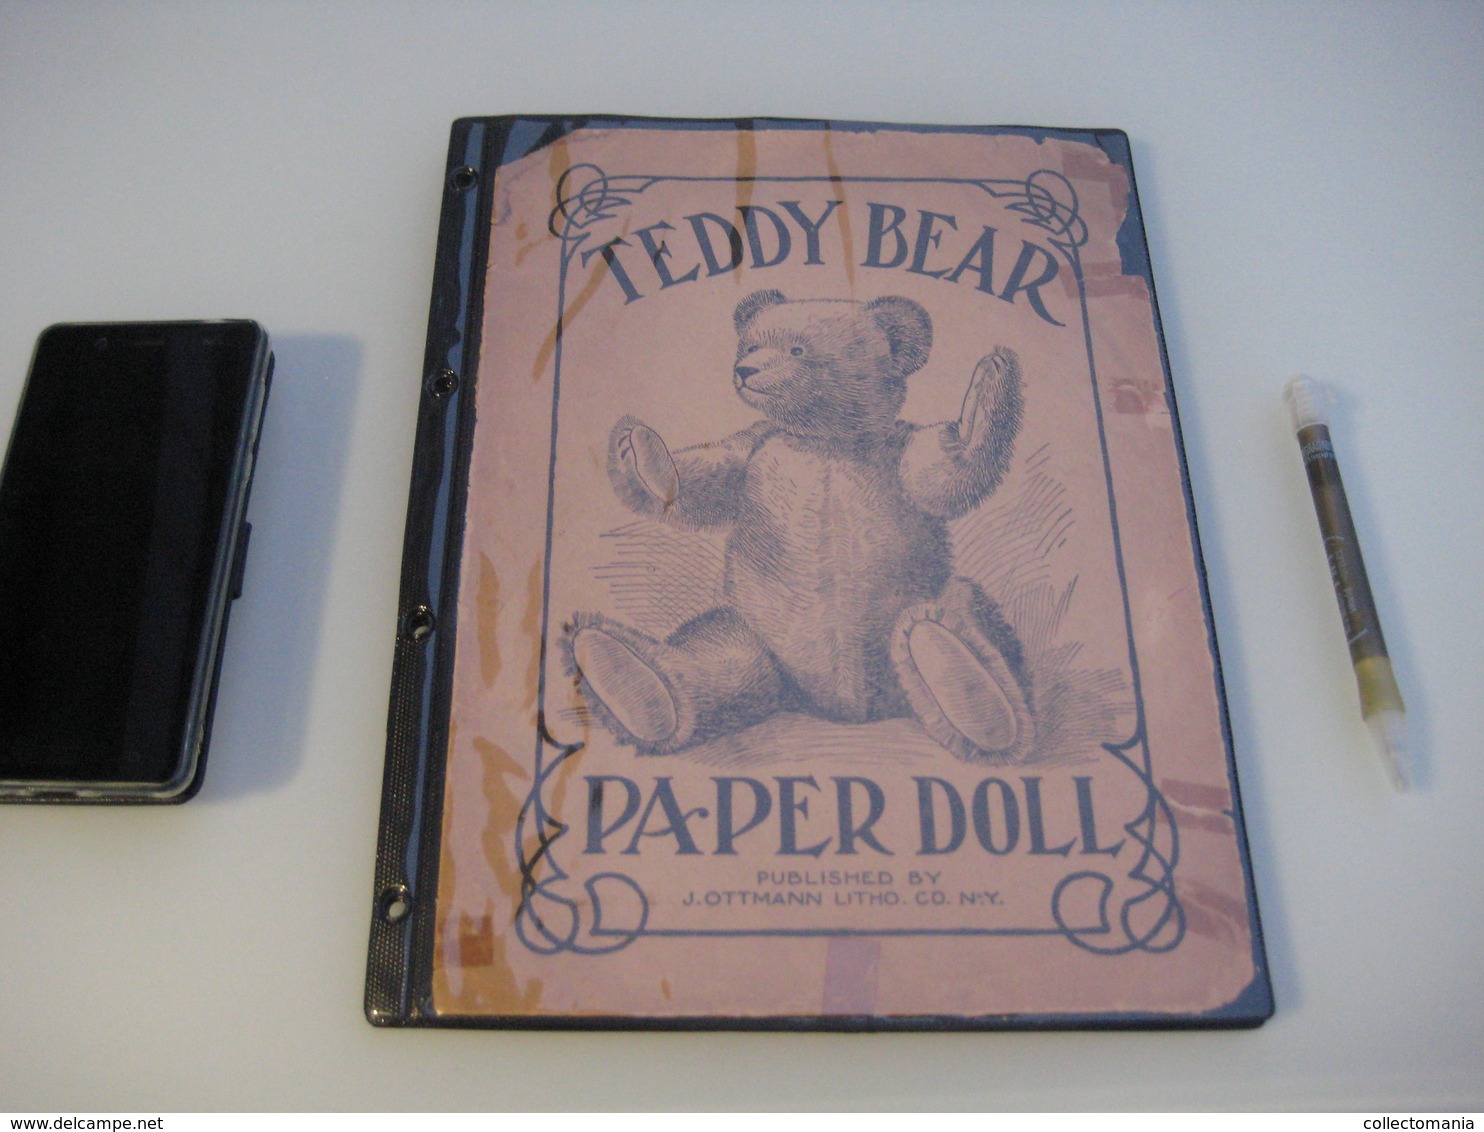 base-ball anno 1907  paper doll outfit  Teddy Bear, Ottman Litho Company c1907, original envelope,5 costumes SPORT RARE